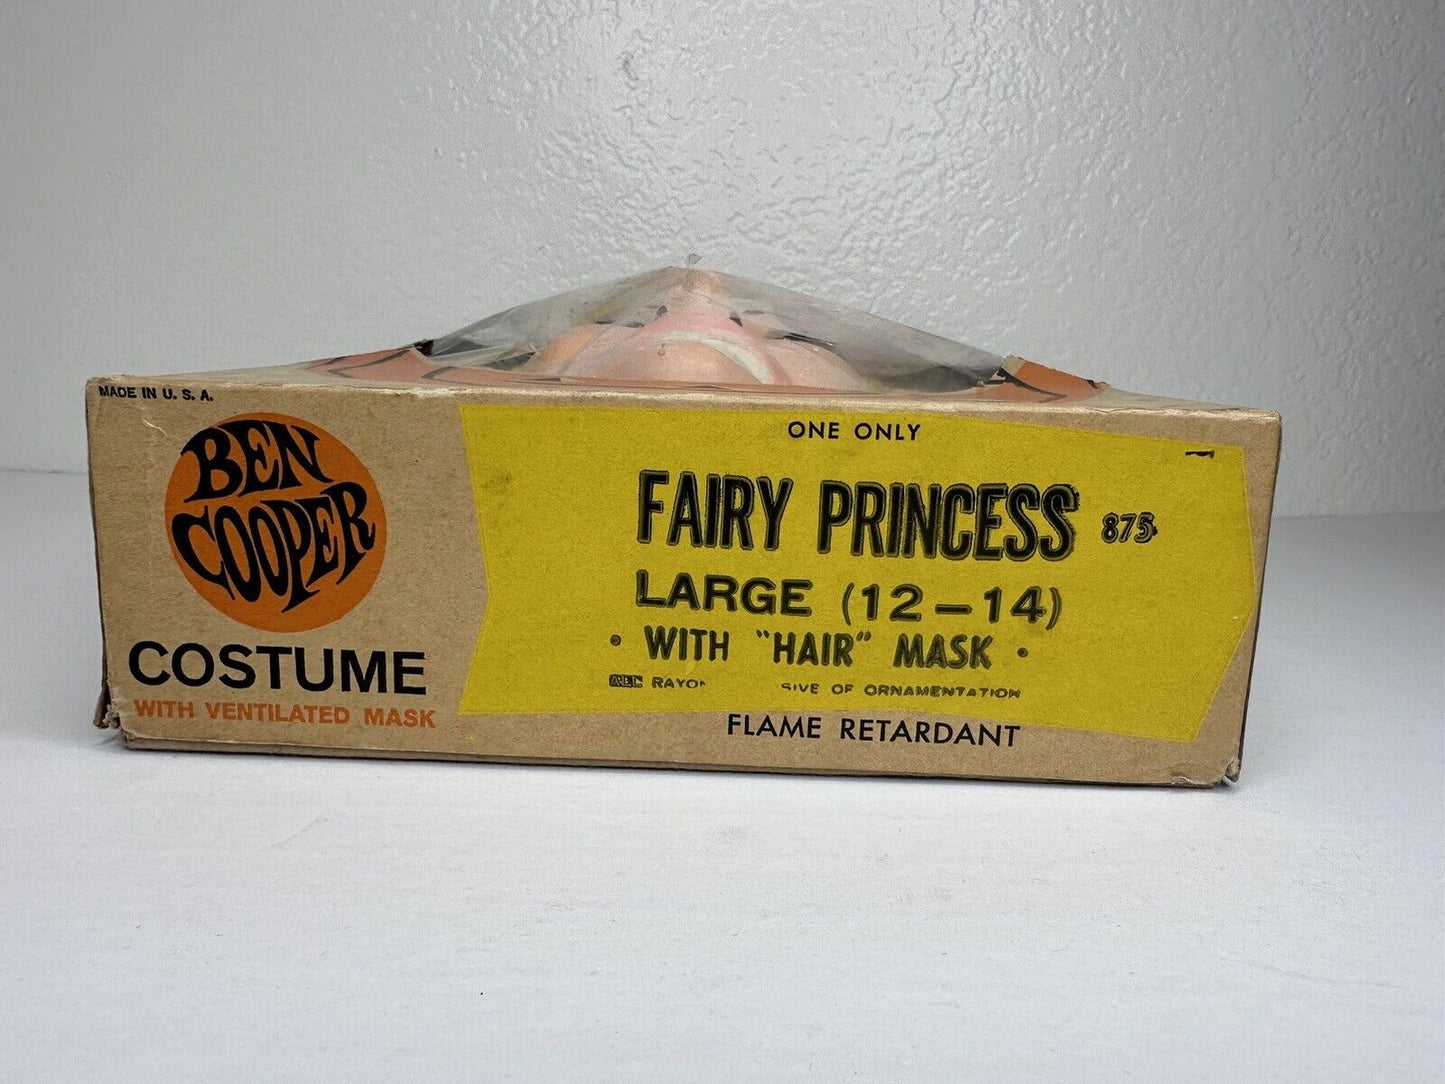 Vintage Ben Cooper Fairy Princess Costume No. 875 with Original Box - 1968 - TreasuTiques